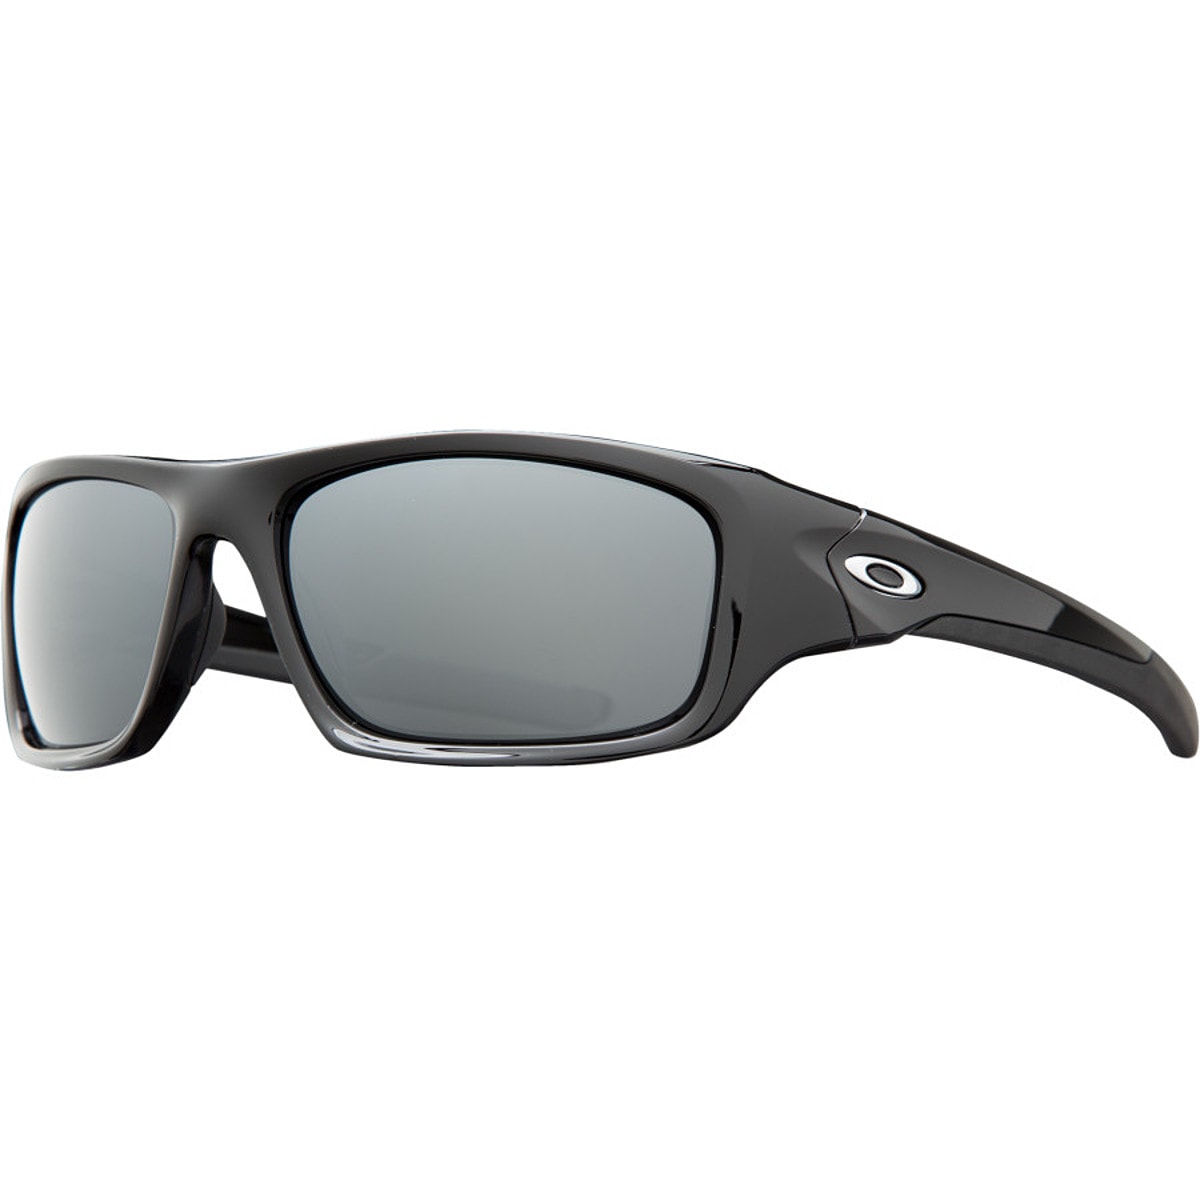 Oakley Valve Sunglasses - Men's